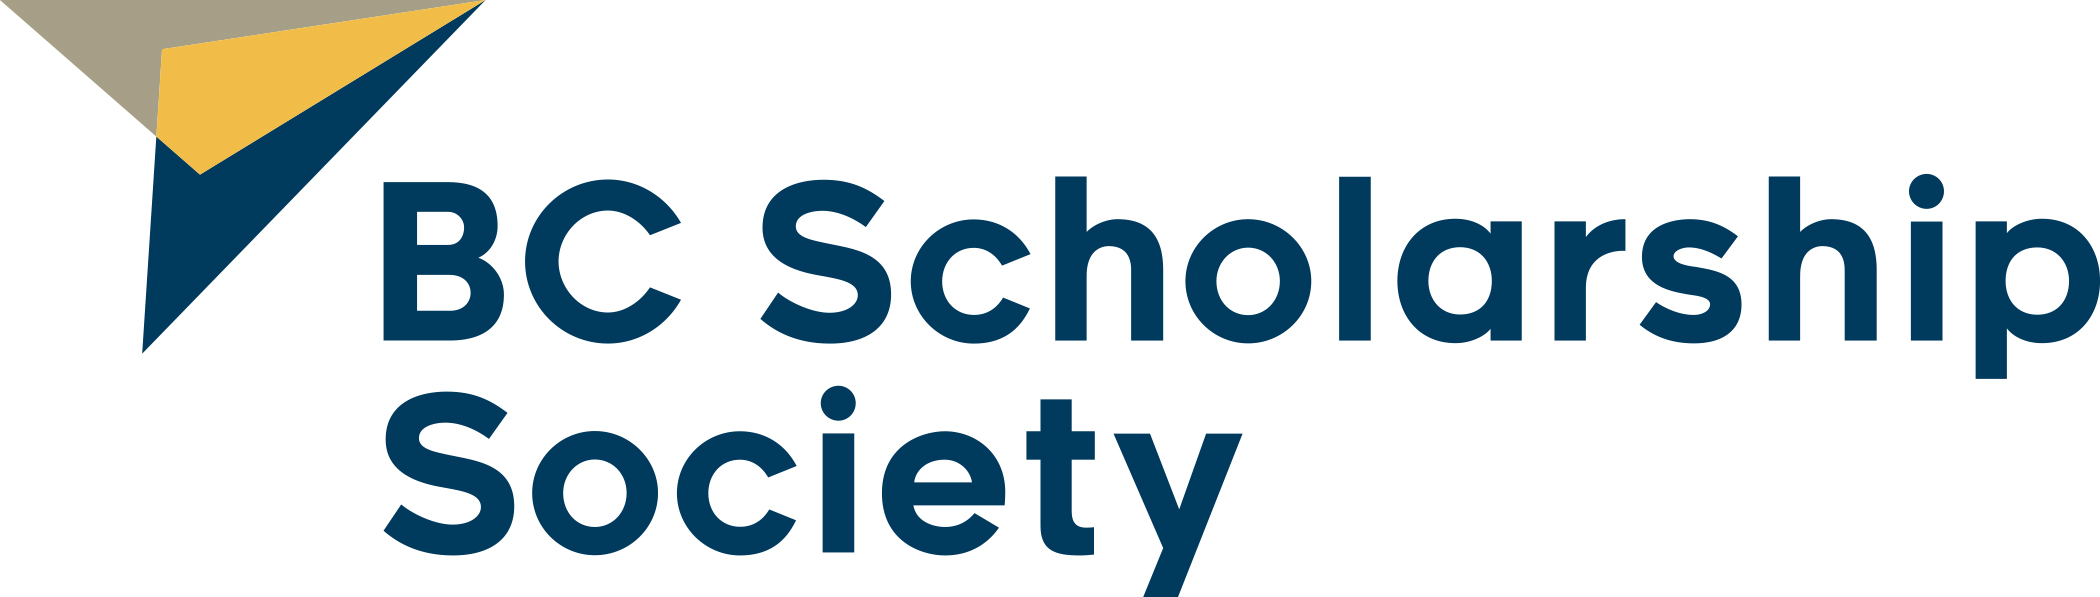 BC Scholarship Society logo